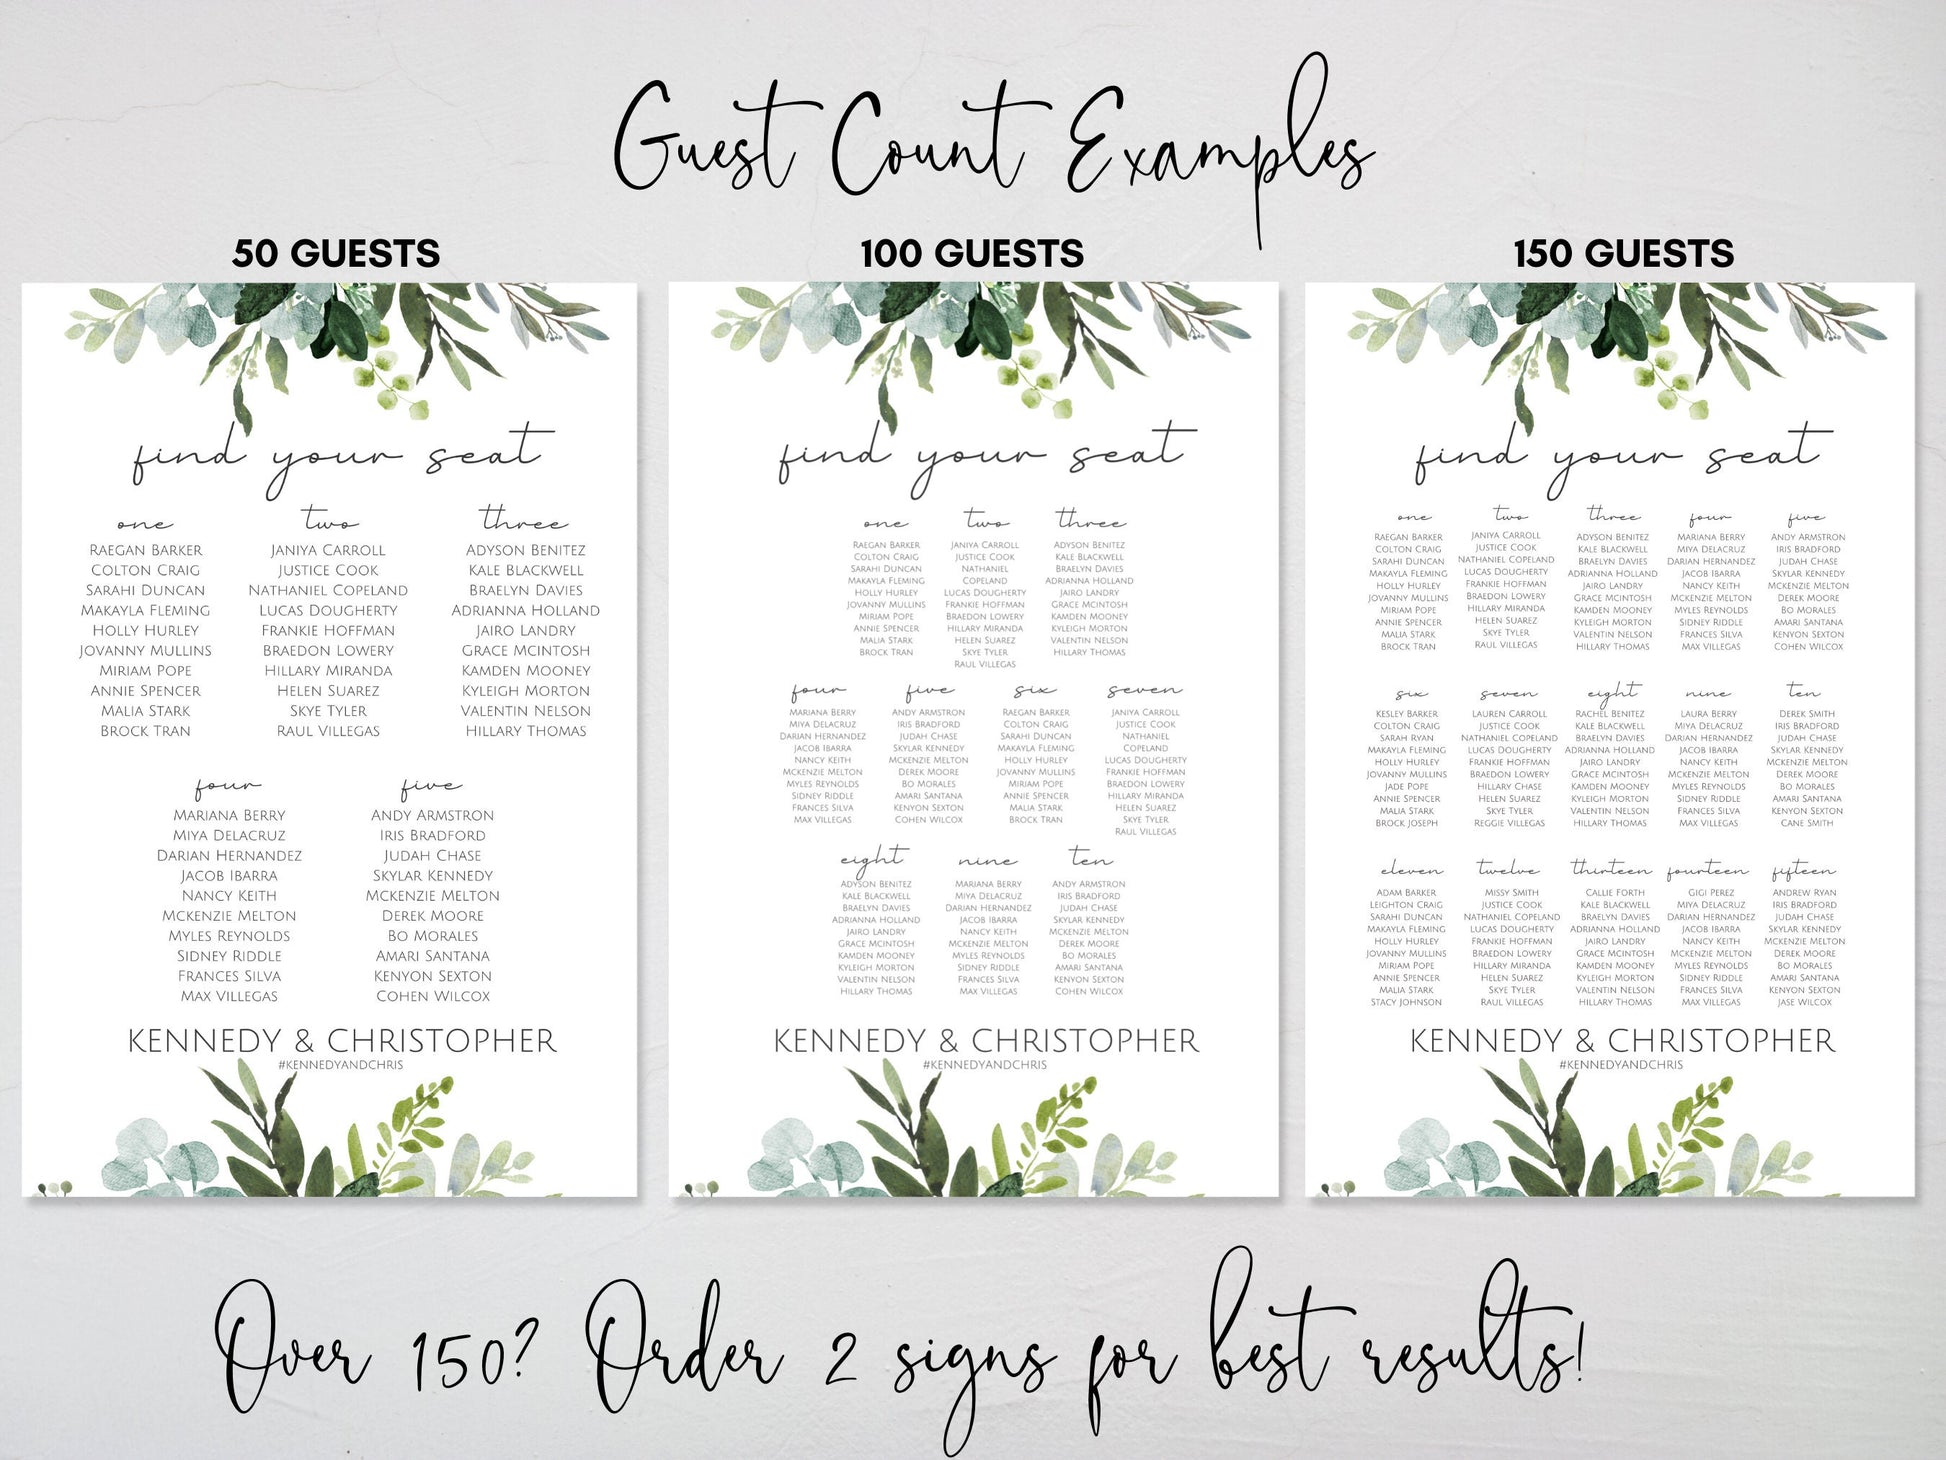 Watercolor Eucalyptus Wedding Welcome & Seating Chart Board Sign Set